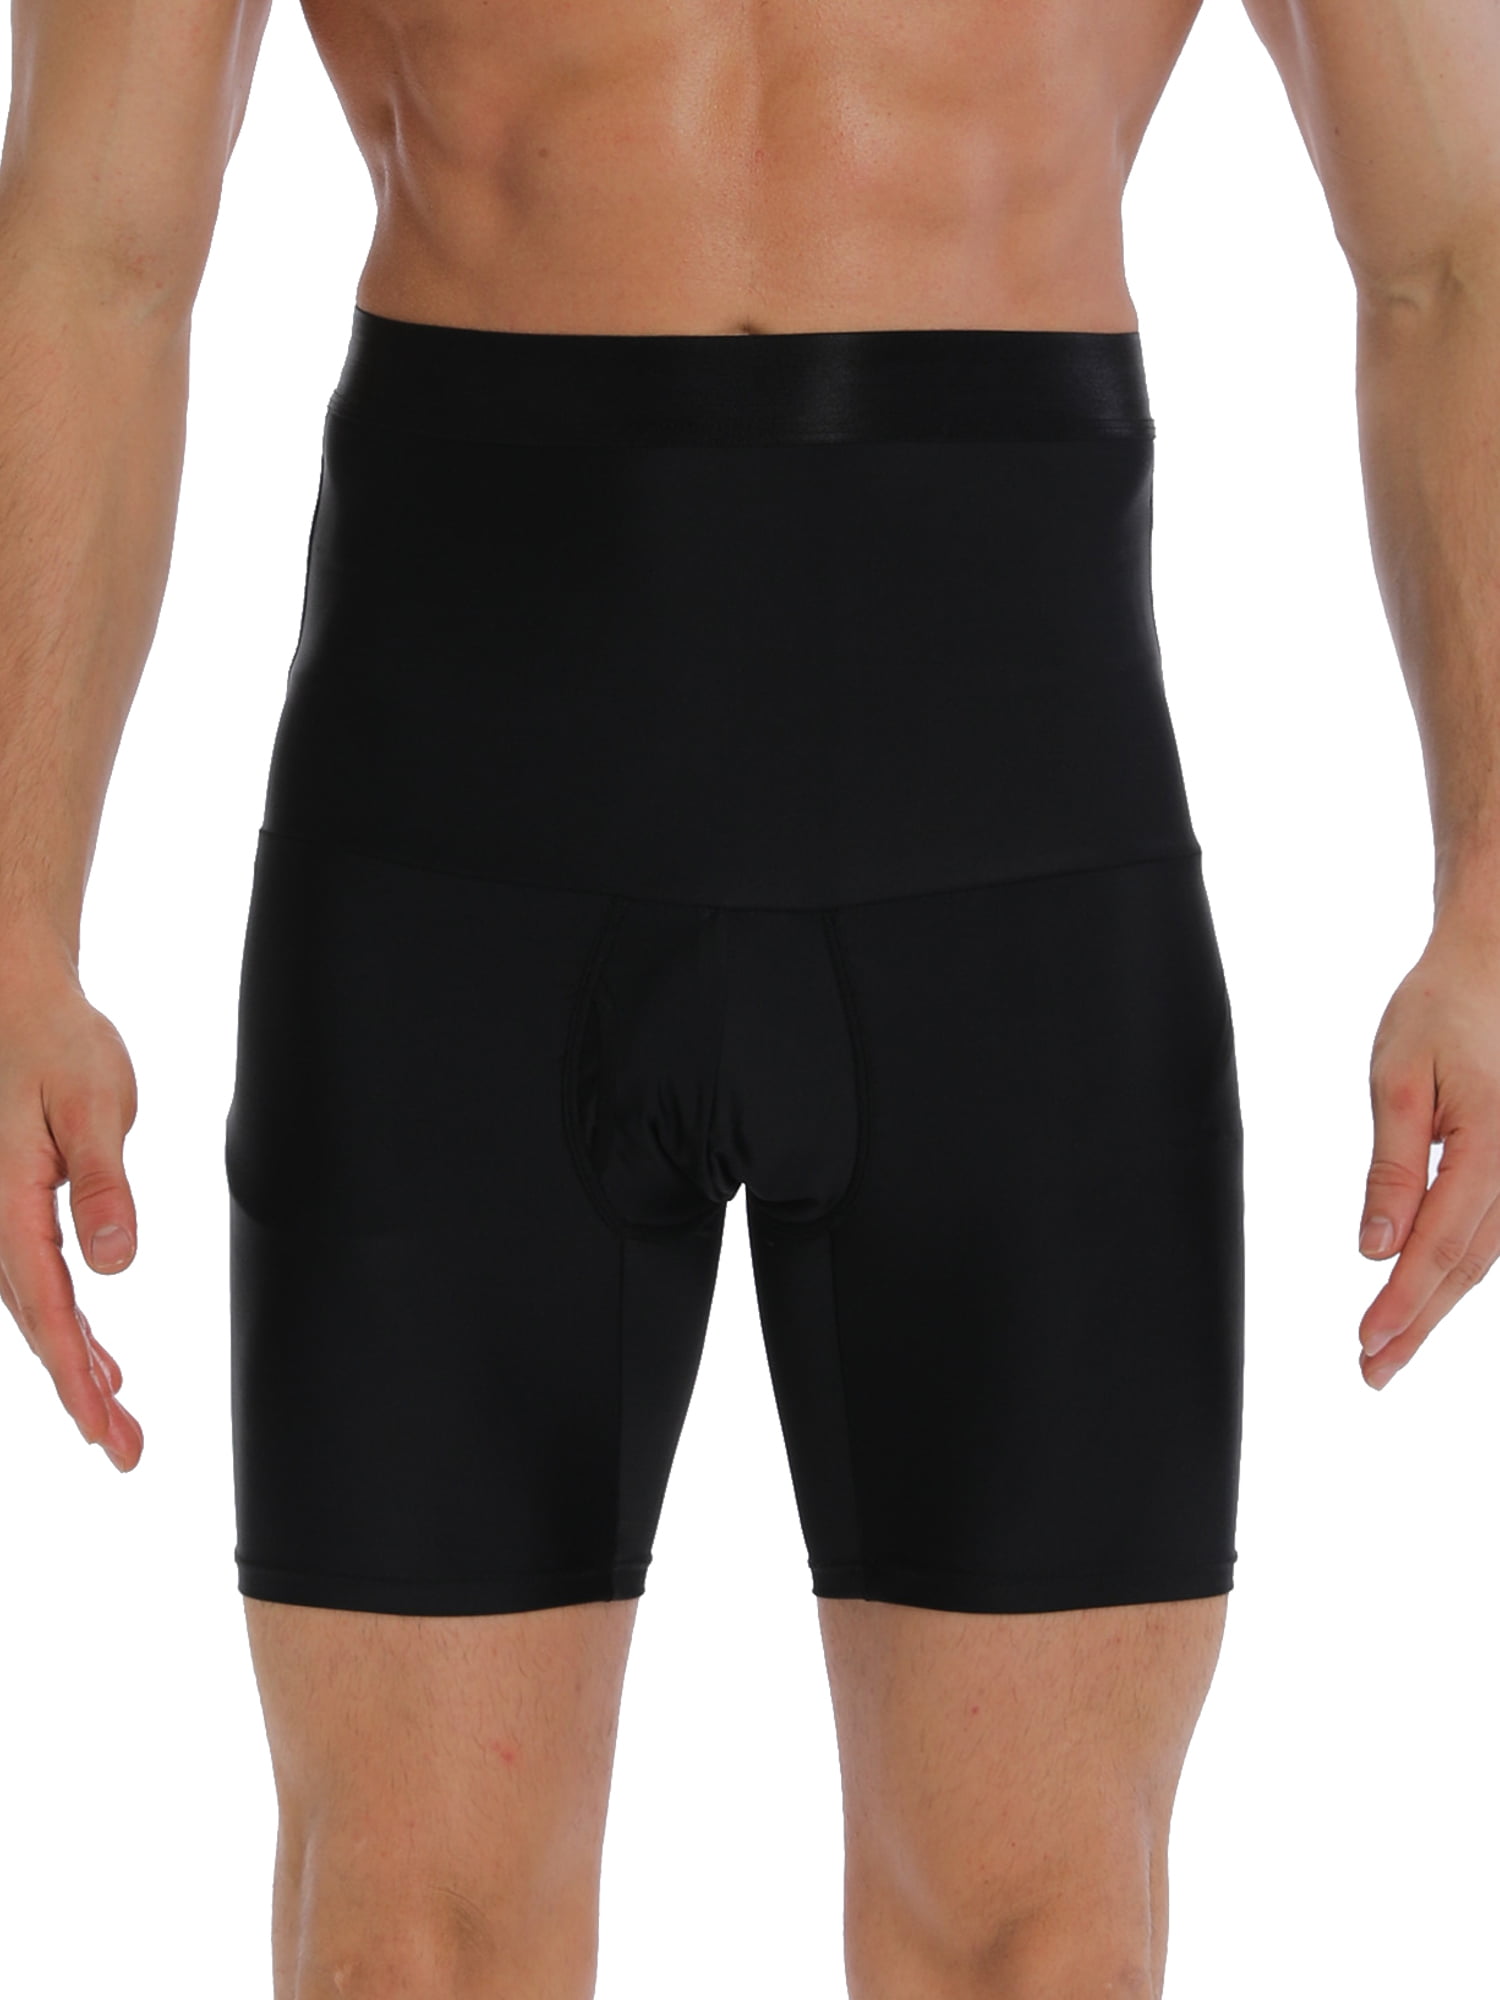 QRIC - QRIC Men Tummy Control Shorts High Waist Body Slimming Shapewear ...